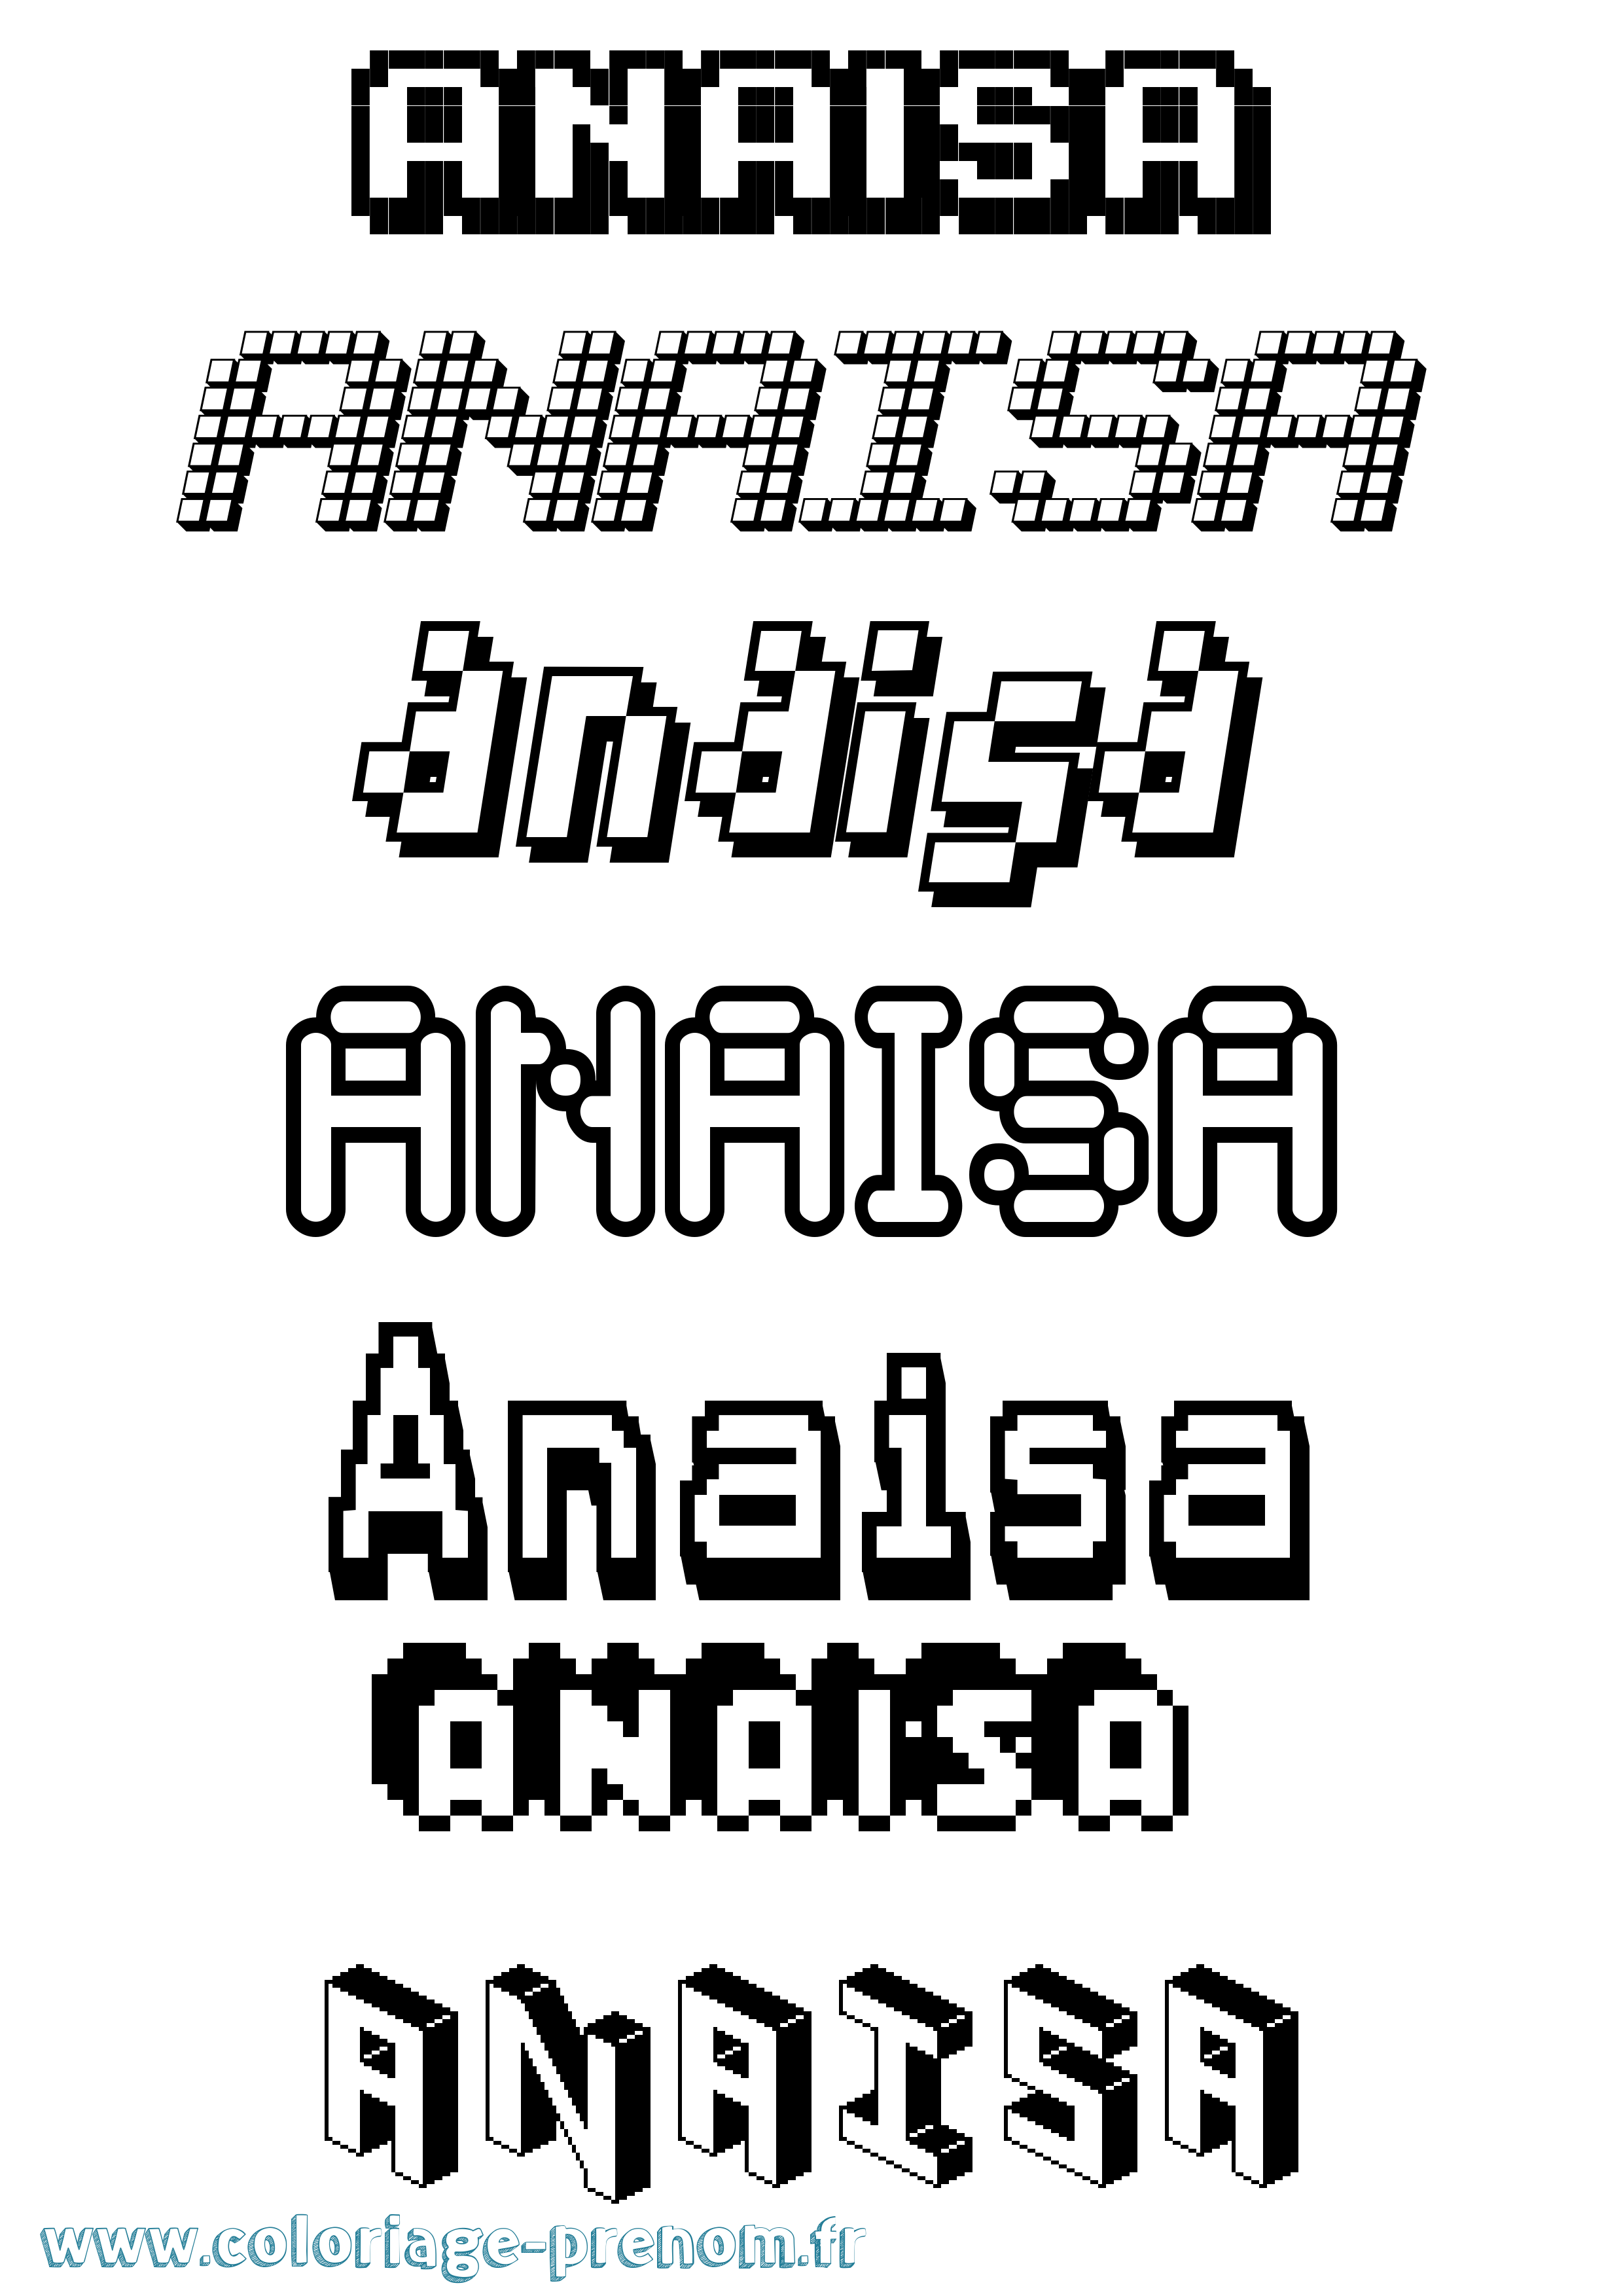 Coloriage prénom Anaisa Pixel